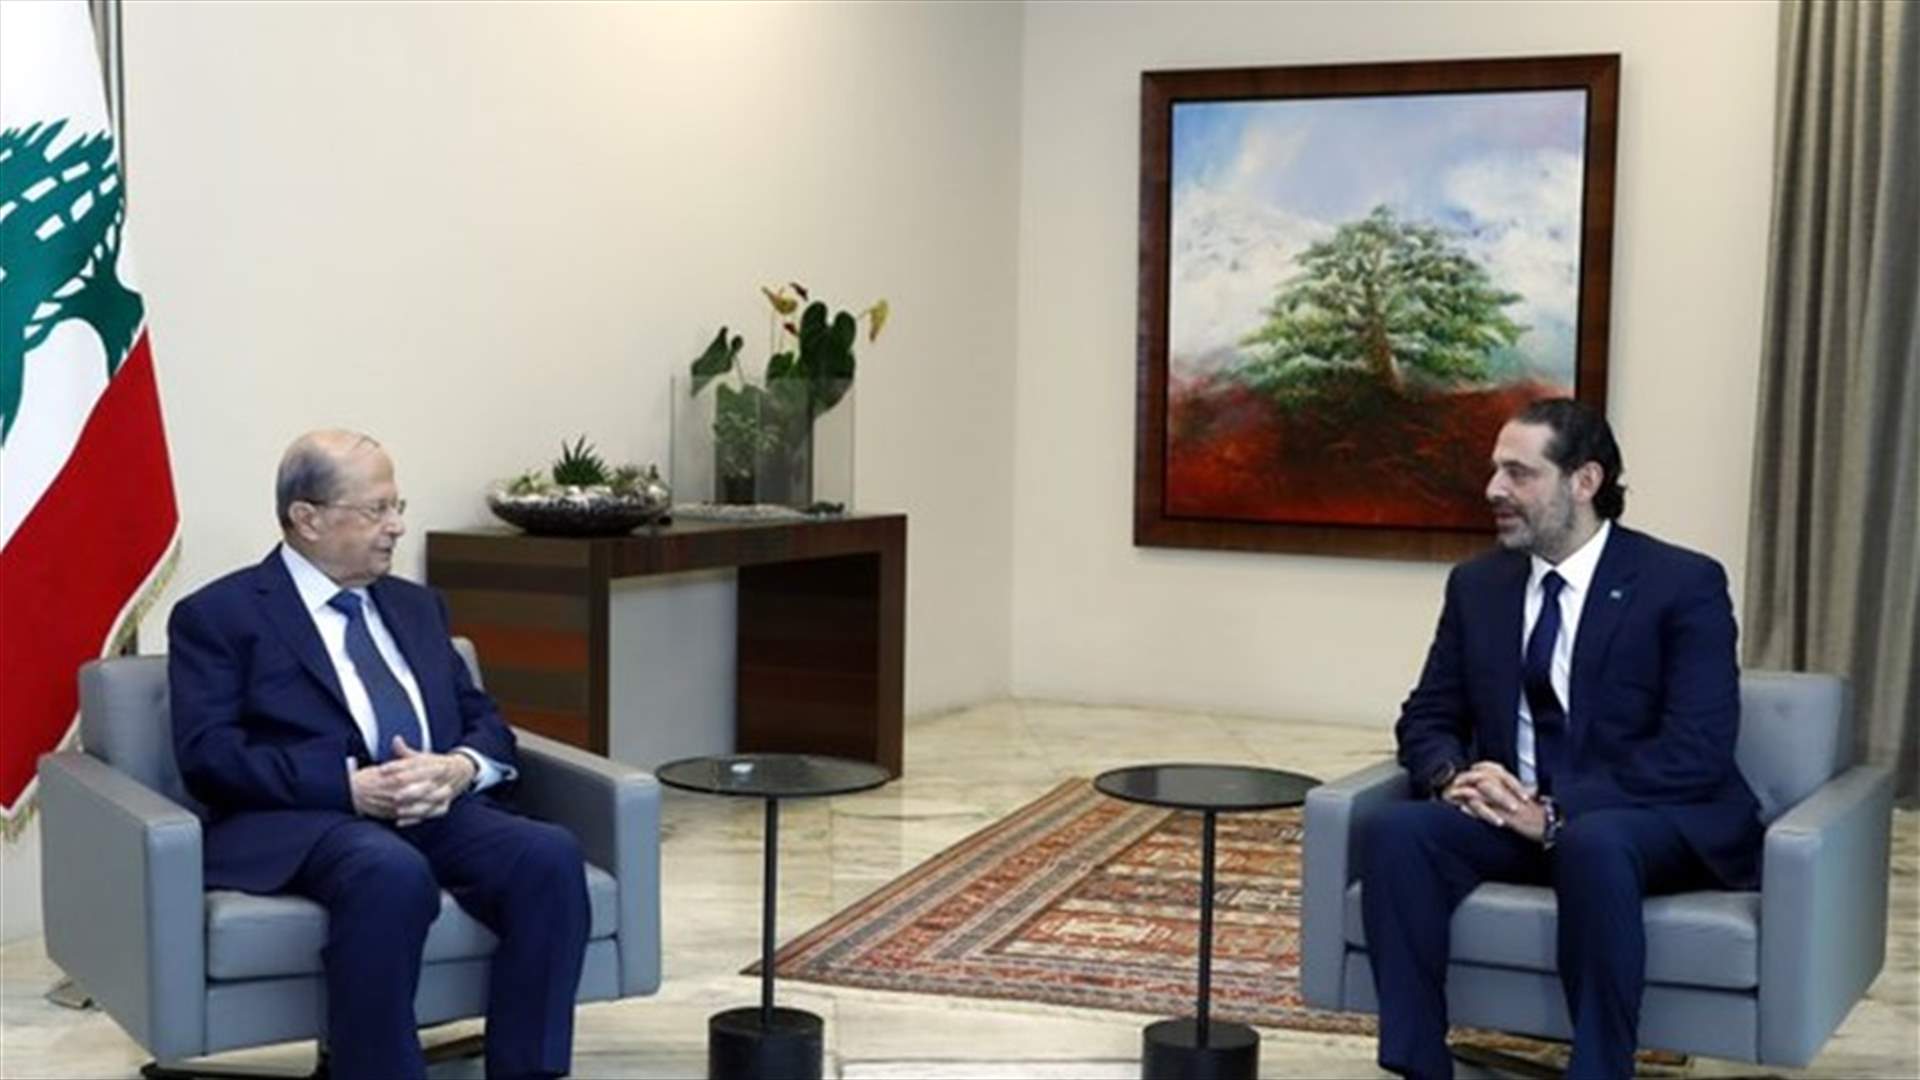 President Aoun meets with PM-designate Hariri